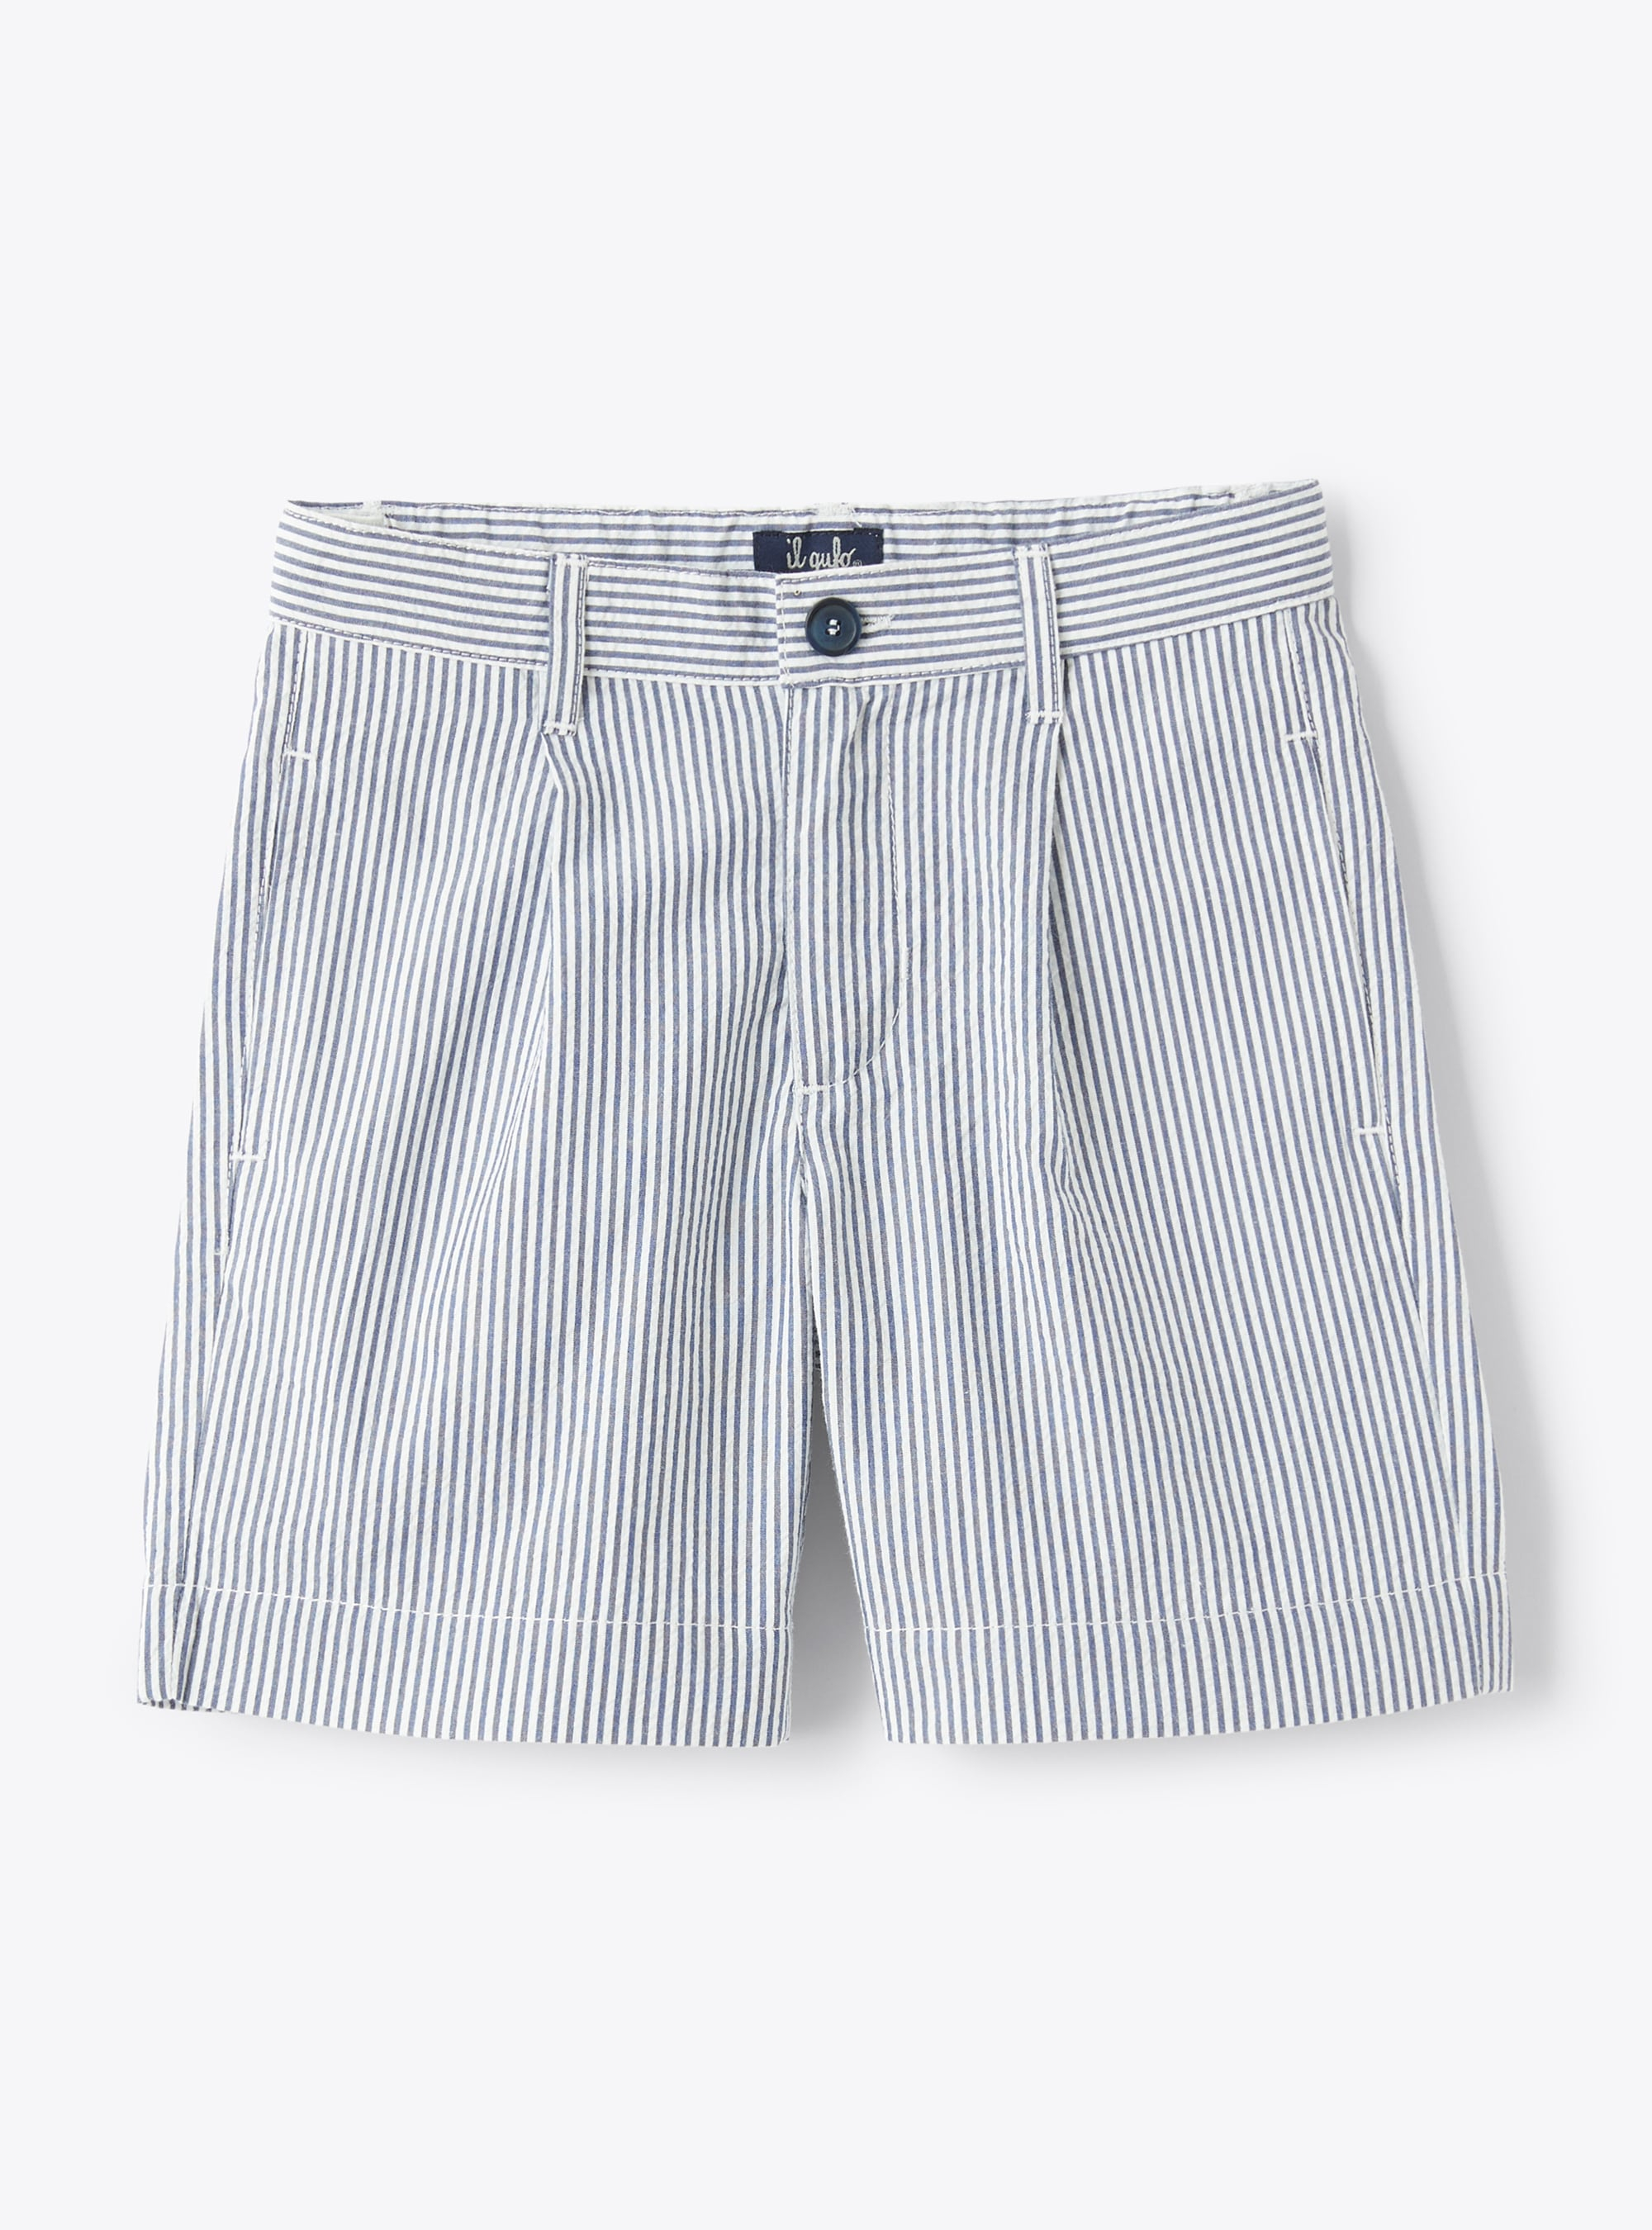 Bermuda shorts in blue-&-white striped seersucker - Blue | Il Gufo